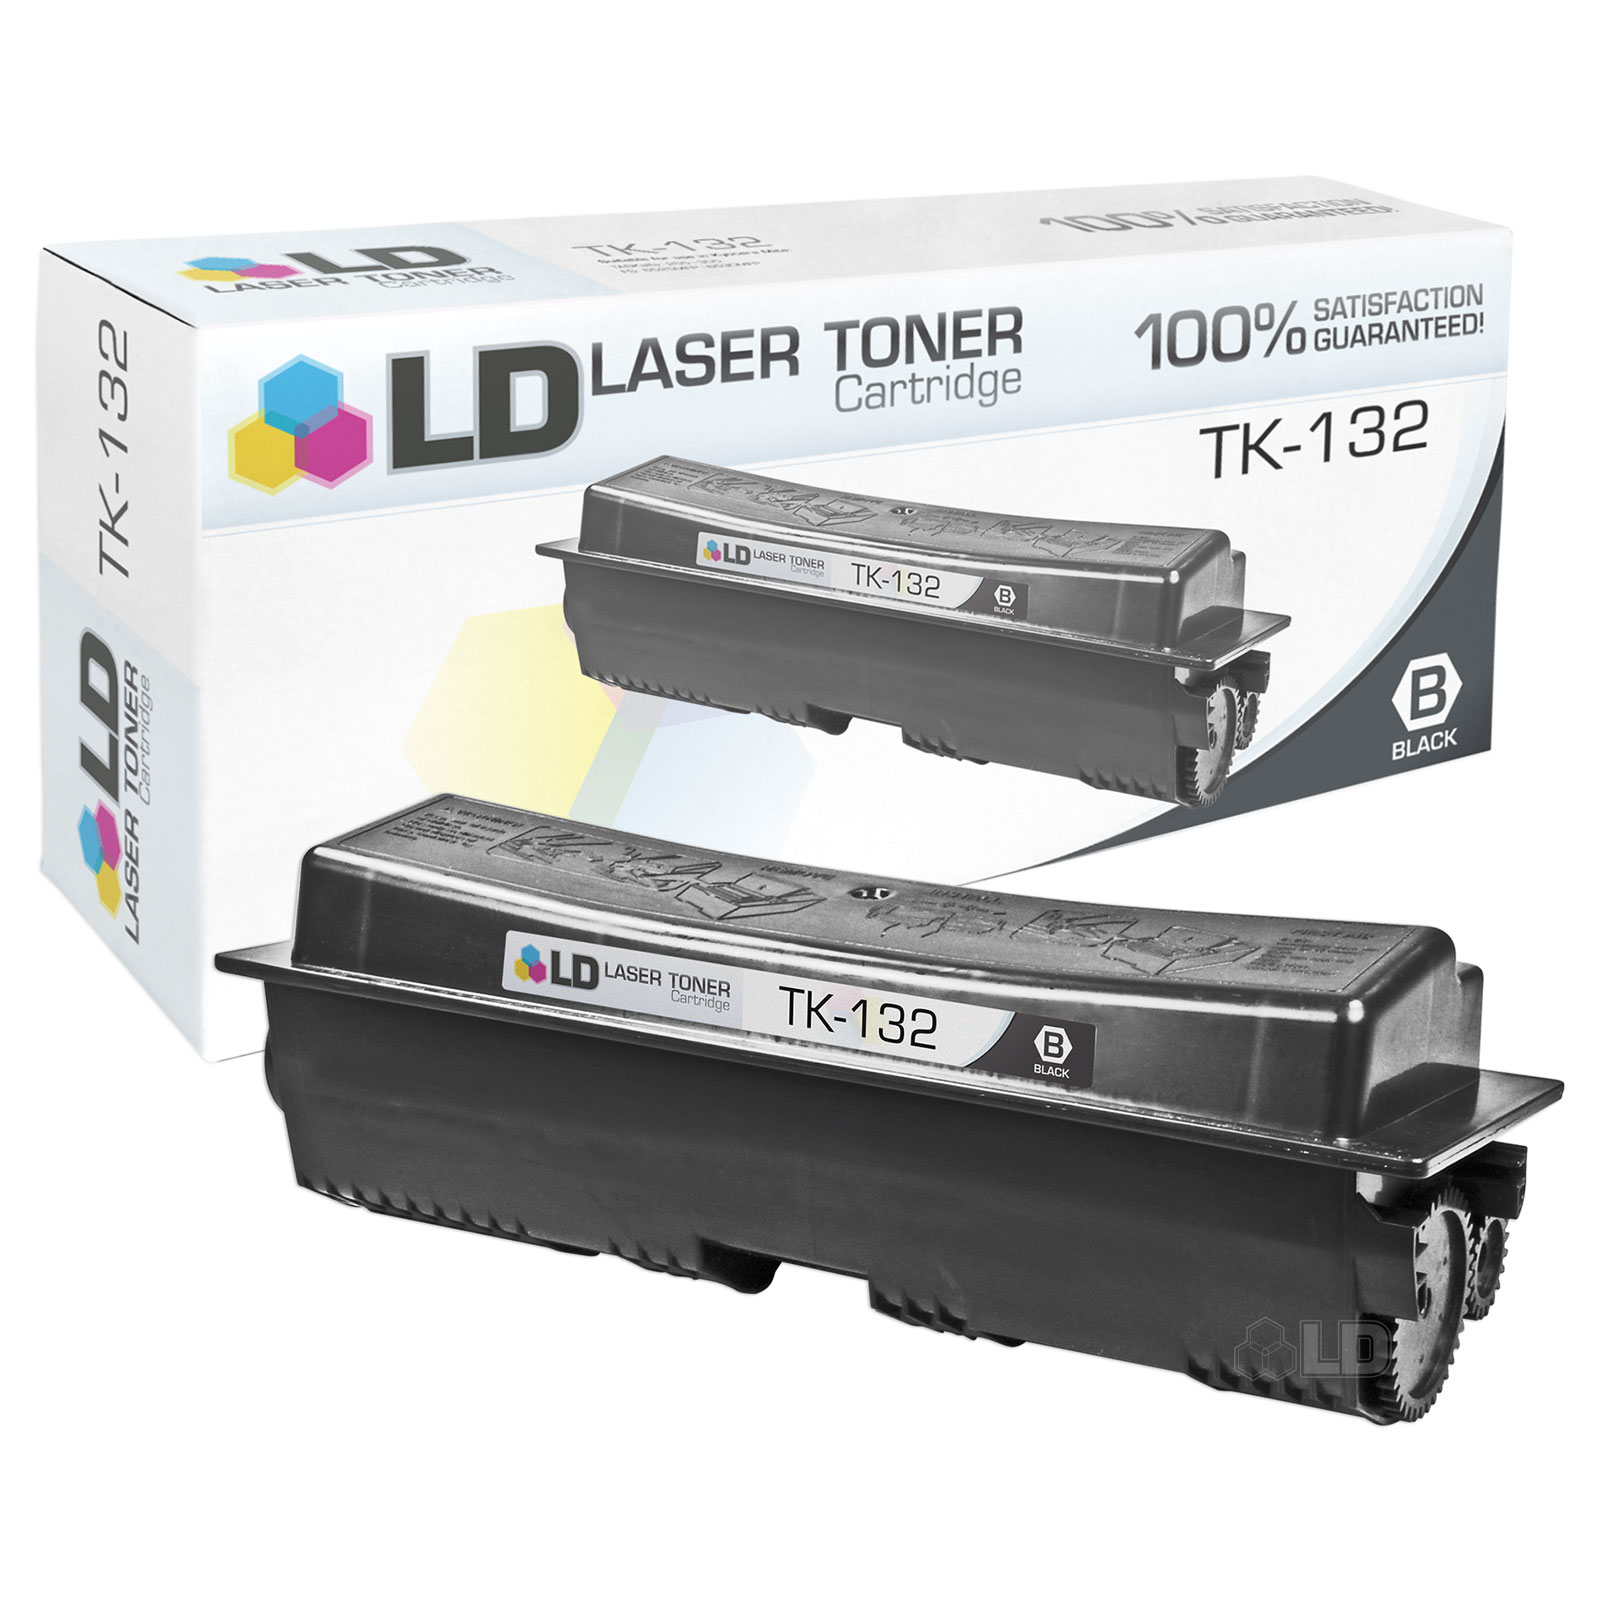 Compatible Replacements for Kyocera-Mita TK-132 Set of 2 Black Laser Toner Cartridges - image 2 of 2